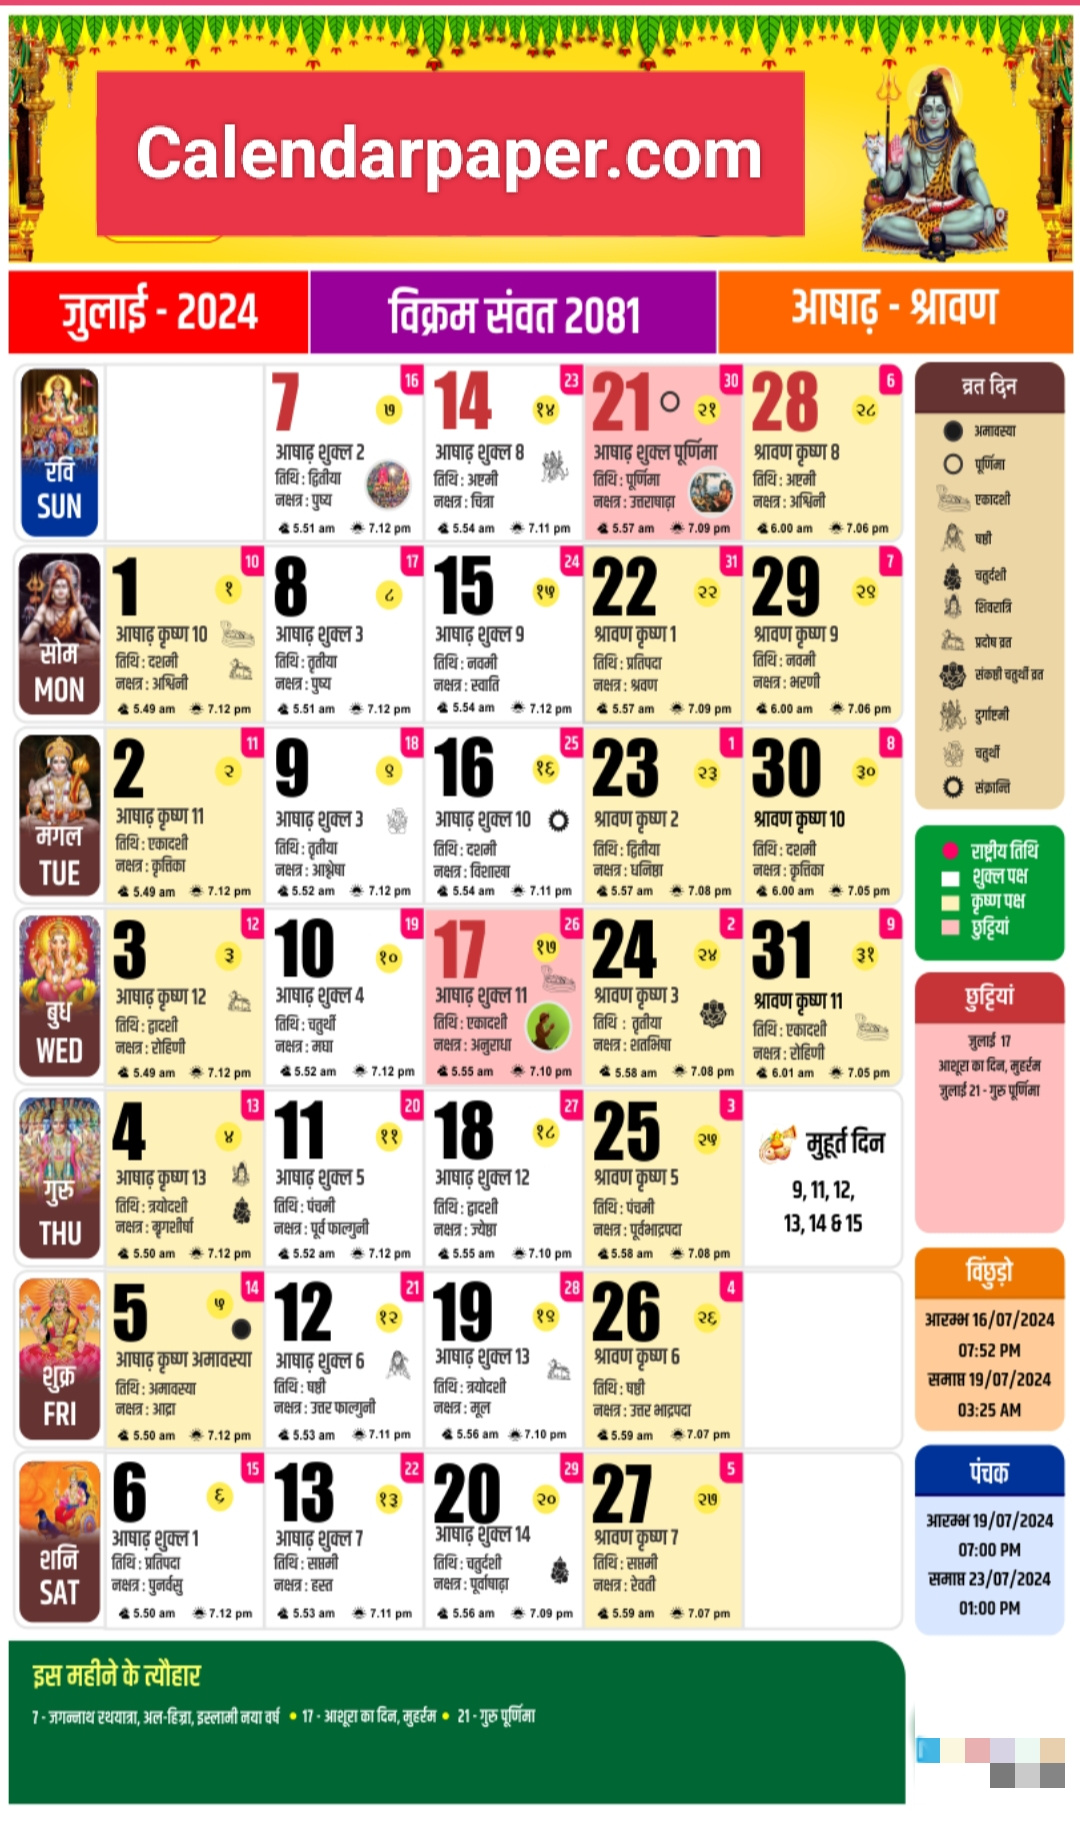 July 2024 Hindu Calendar All Festivals, Tithi, Panchang, And pertaining to 19th July 2024 Hindu Calendar